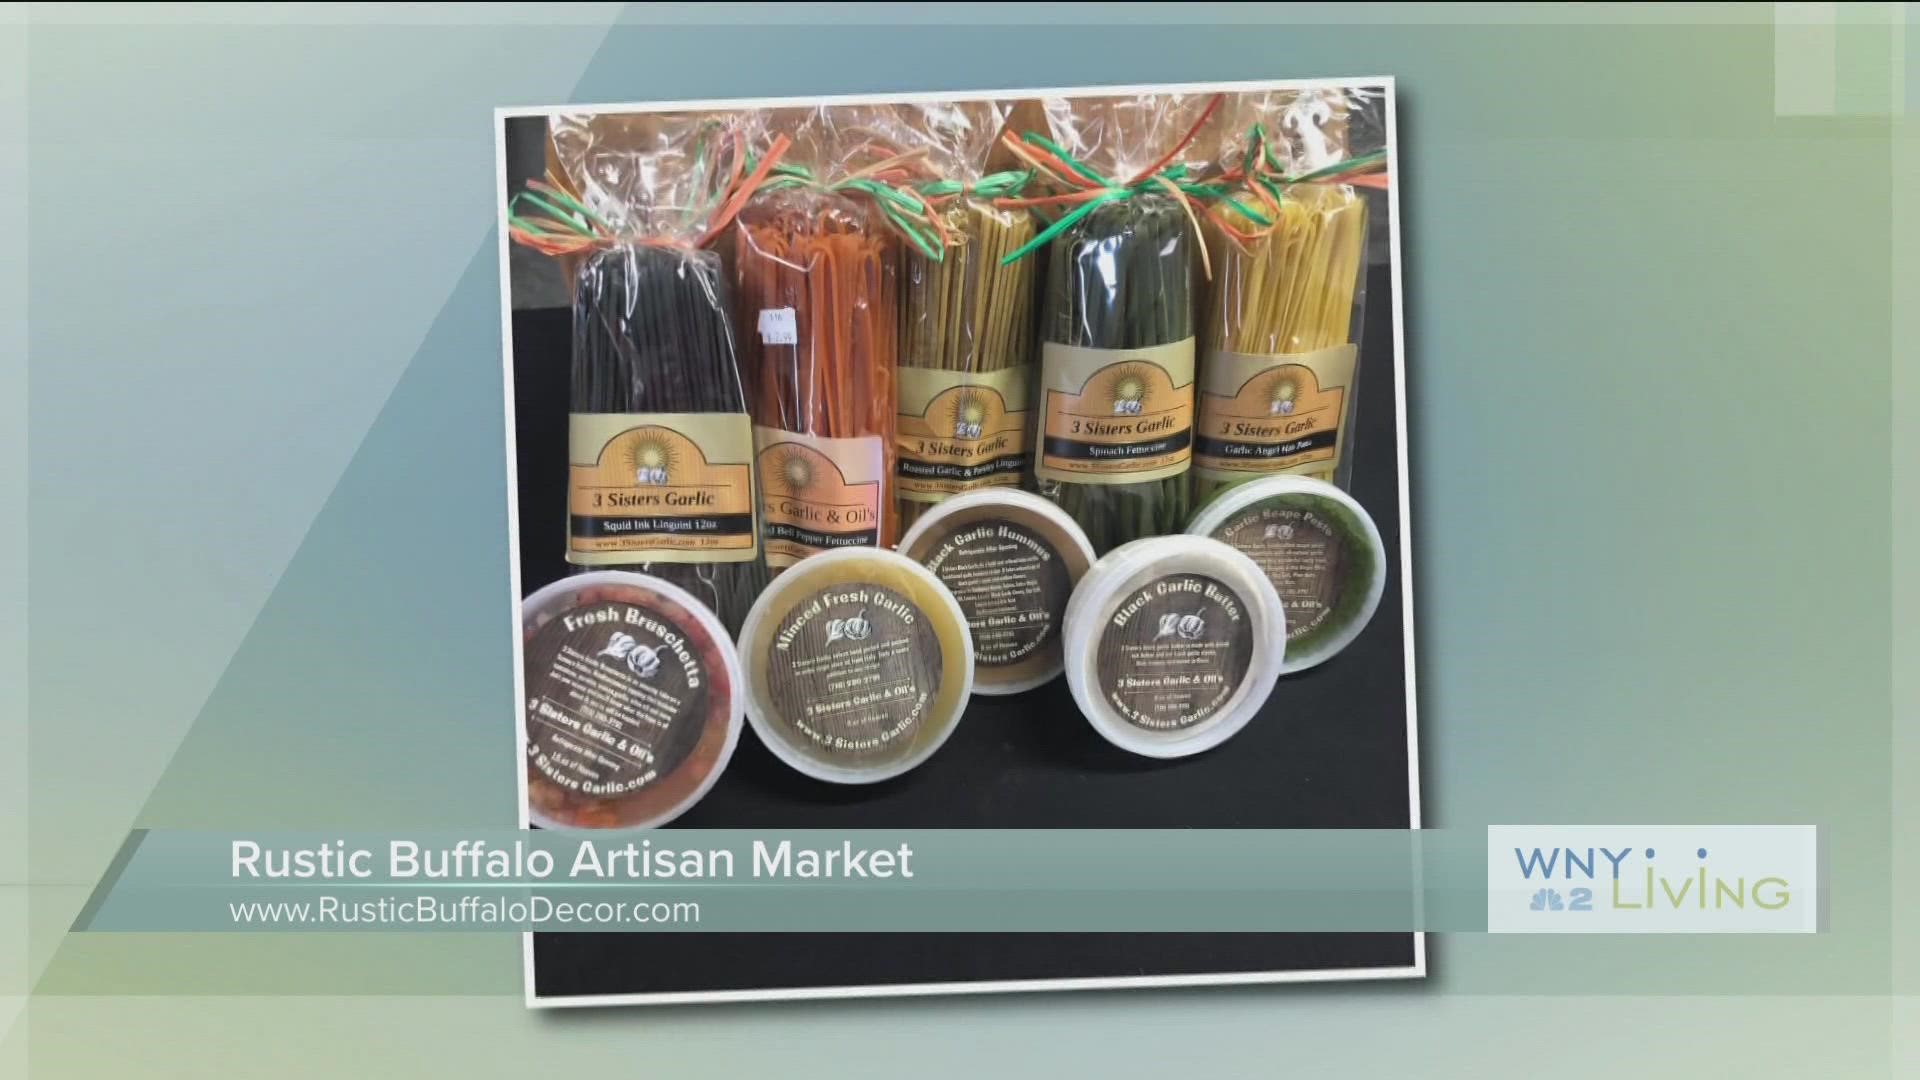 WNY Living - September 10 - Rustic Buffalo Artisan Market (THIS VIDEO IS SPONSORED BY RUSTIC BUFFALO ARTISAN MARKET)